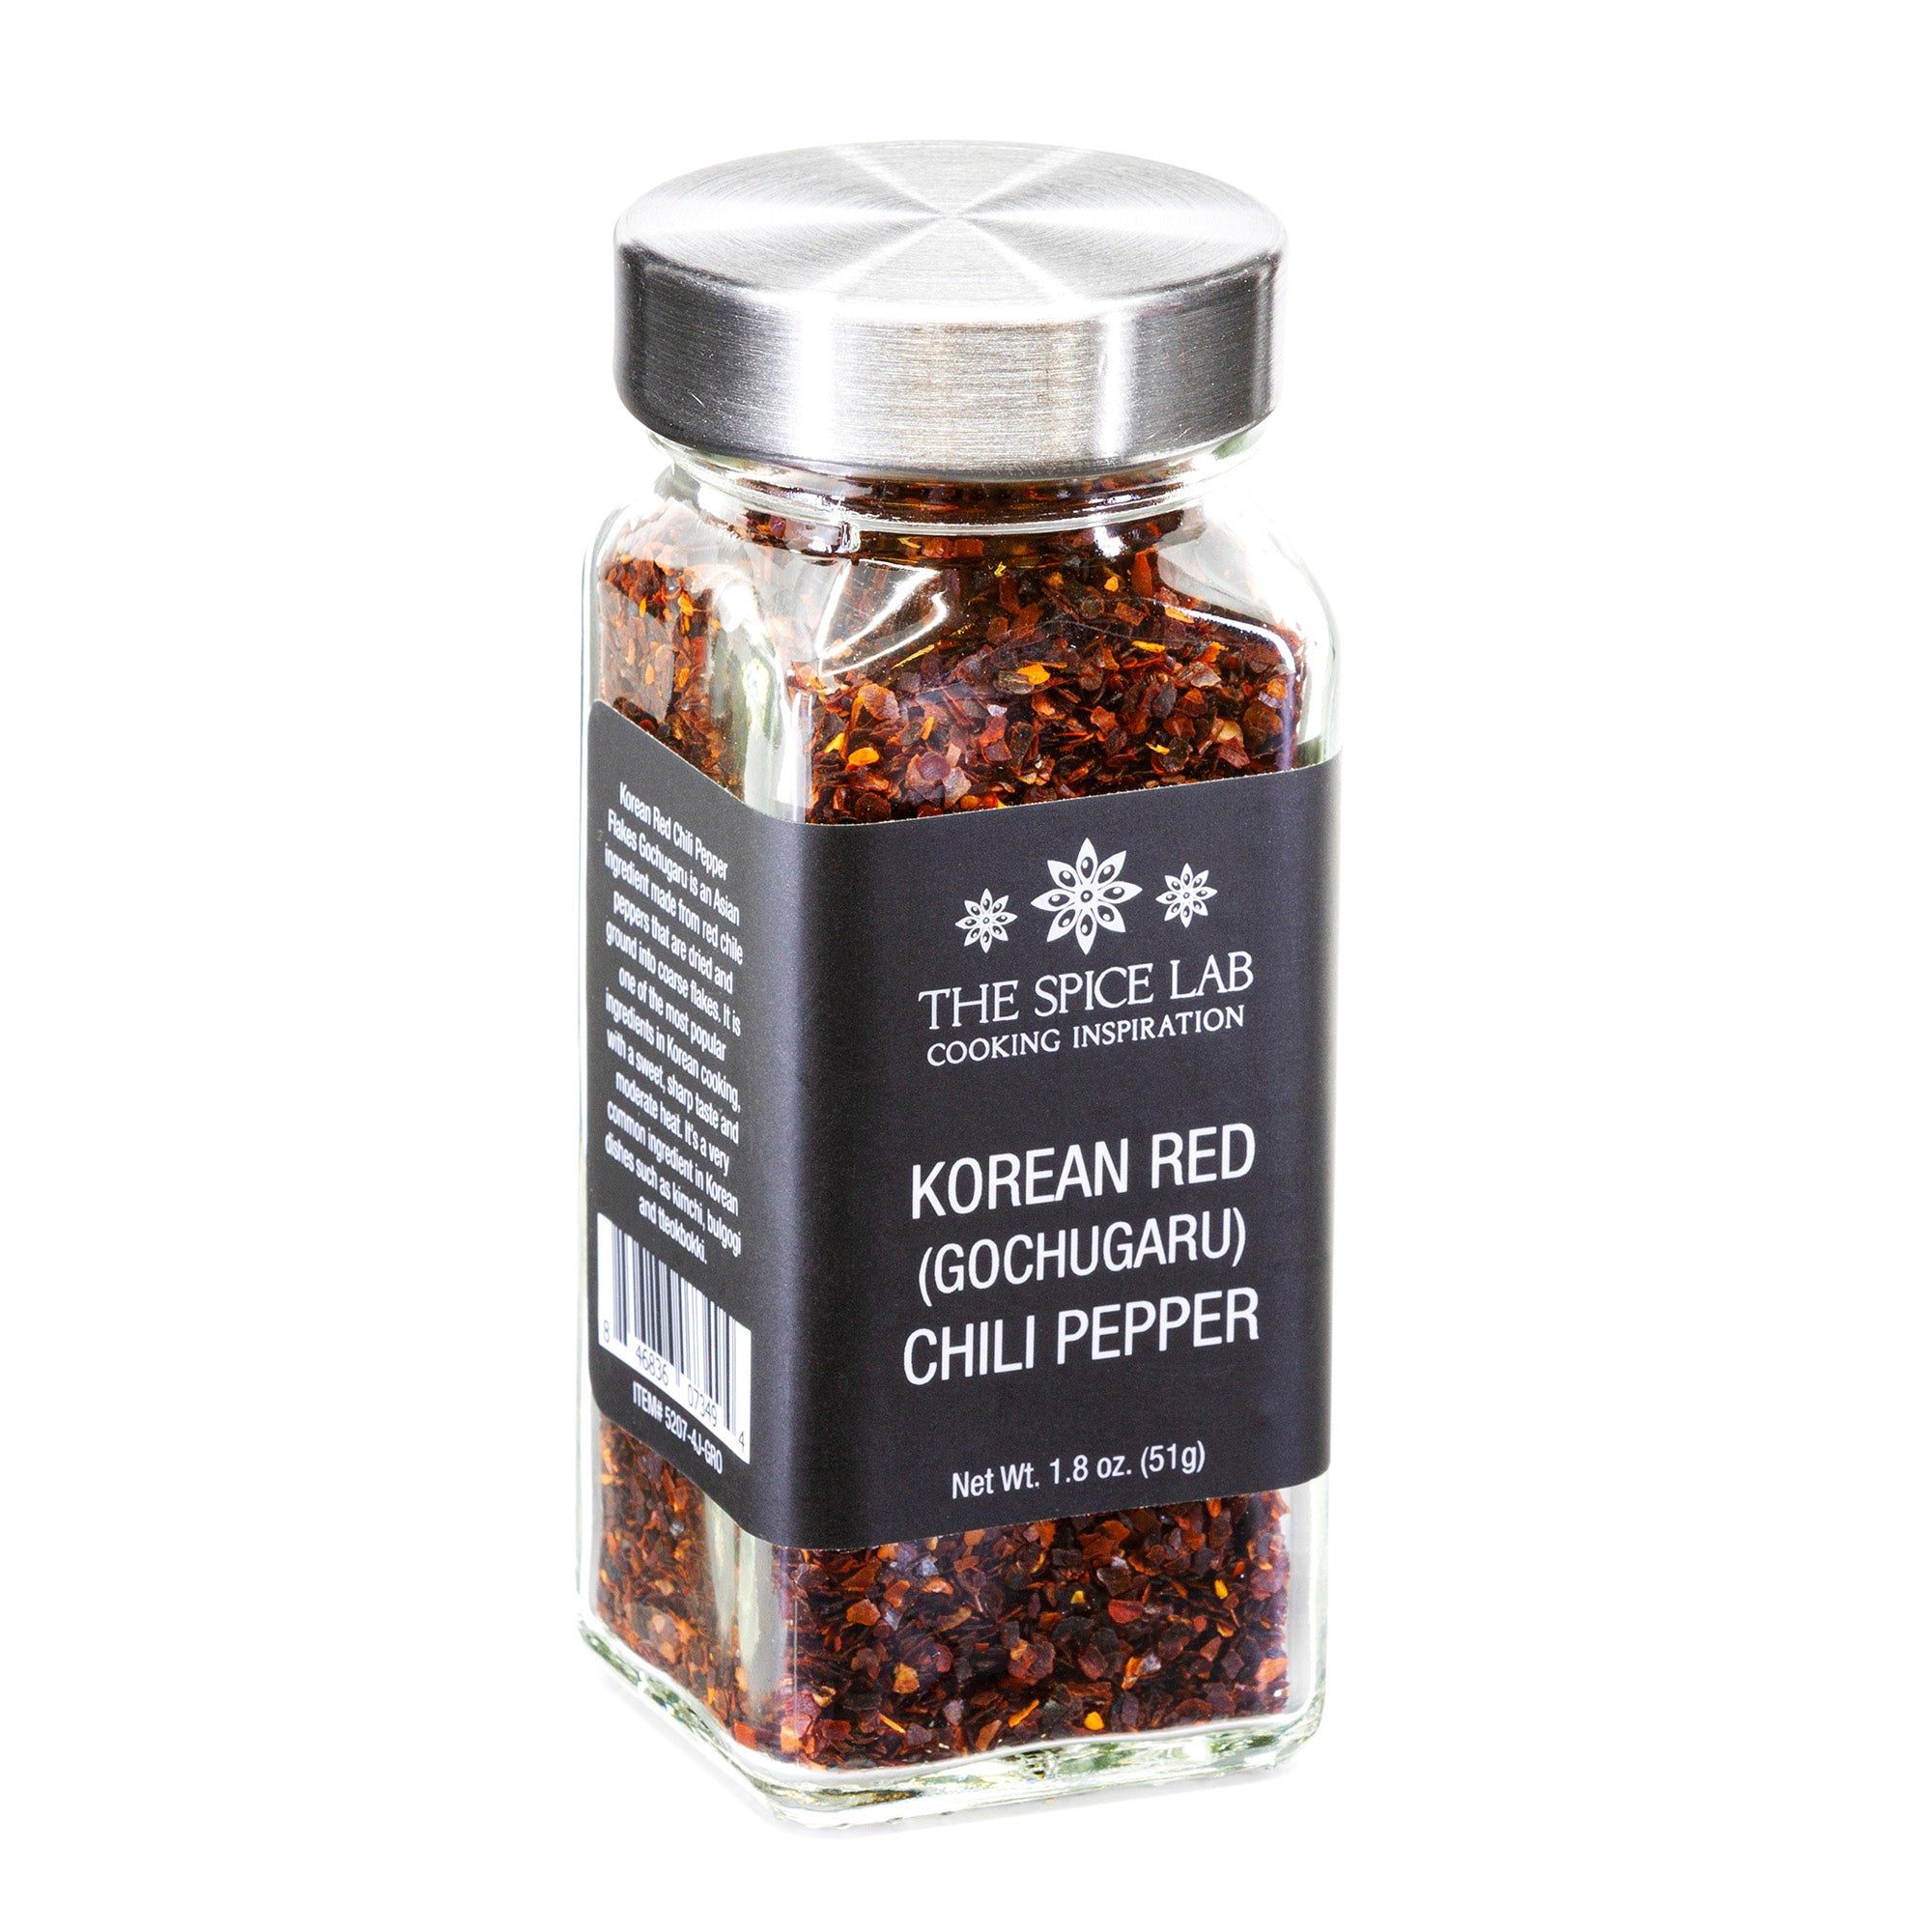 Korean Red Pepper Flakes (Gochugaru)